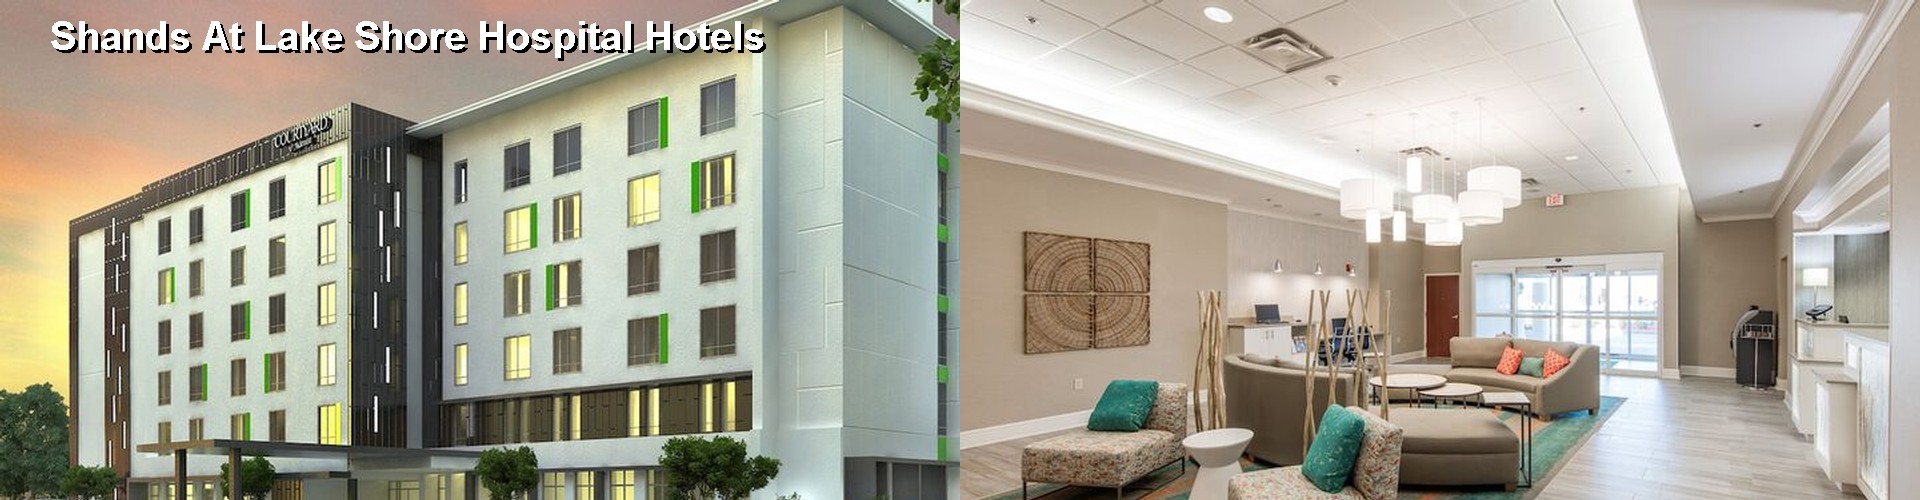 2 Best Hotels near Shands At Lake Shore Hospital